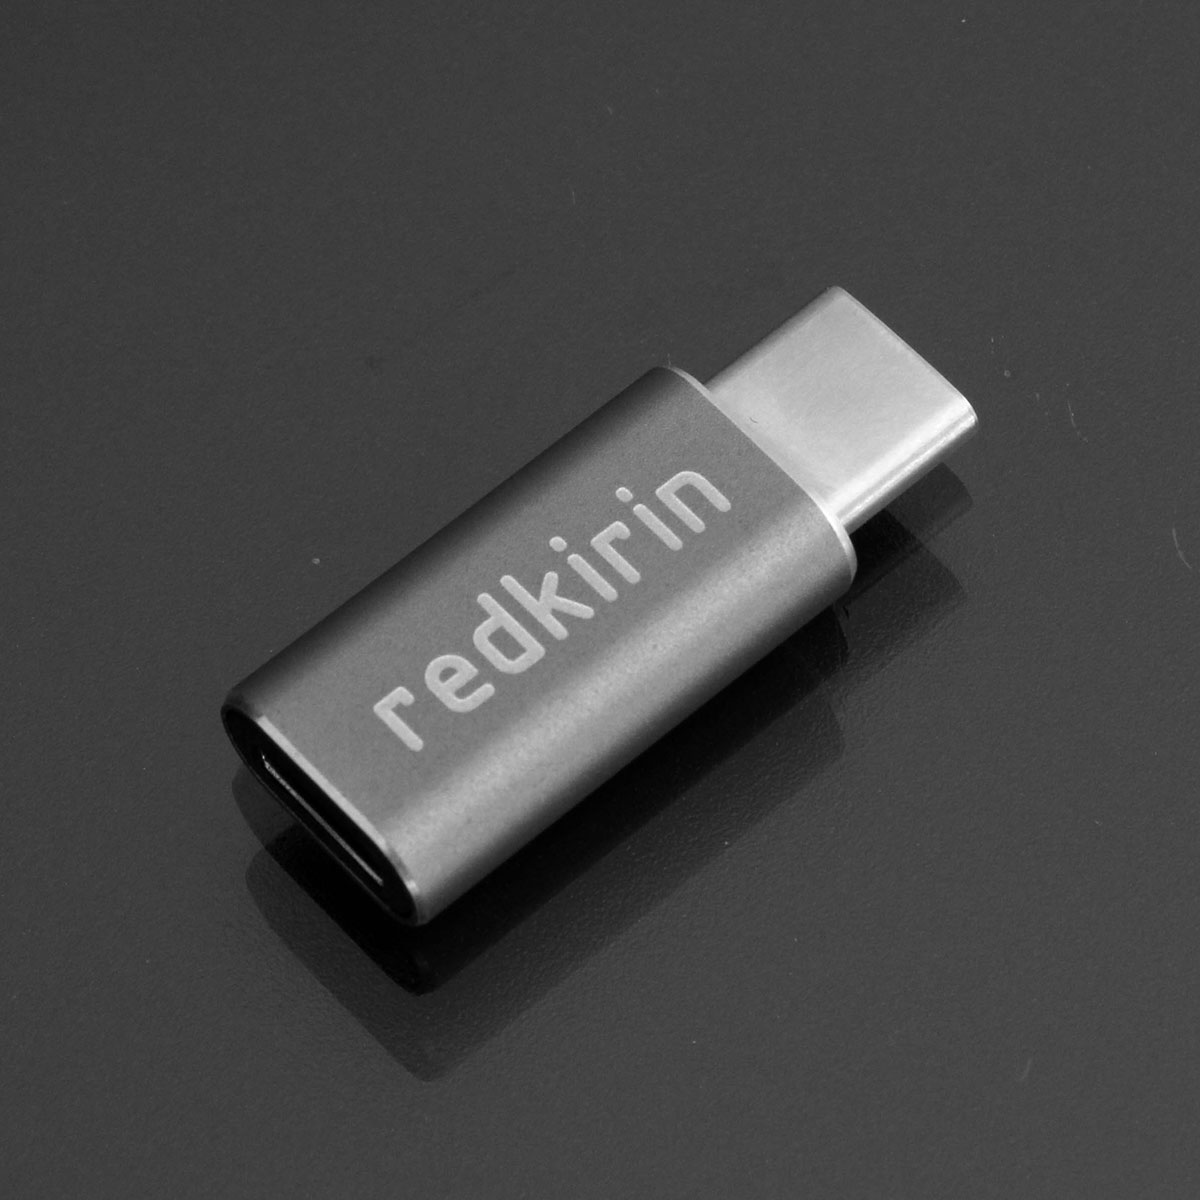 Redkirin-Micro-Usb-to-Type-c--Alluminium-Alloy-Transfer-Adapter-1008137